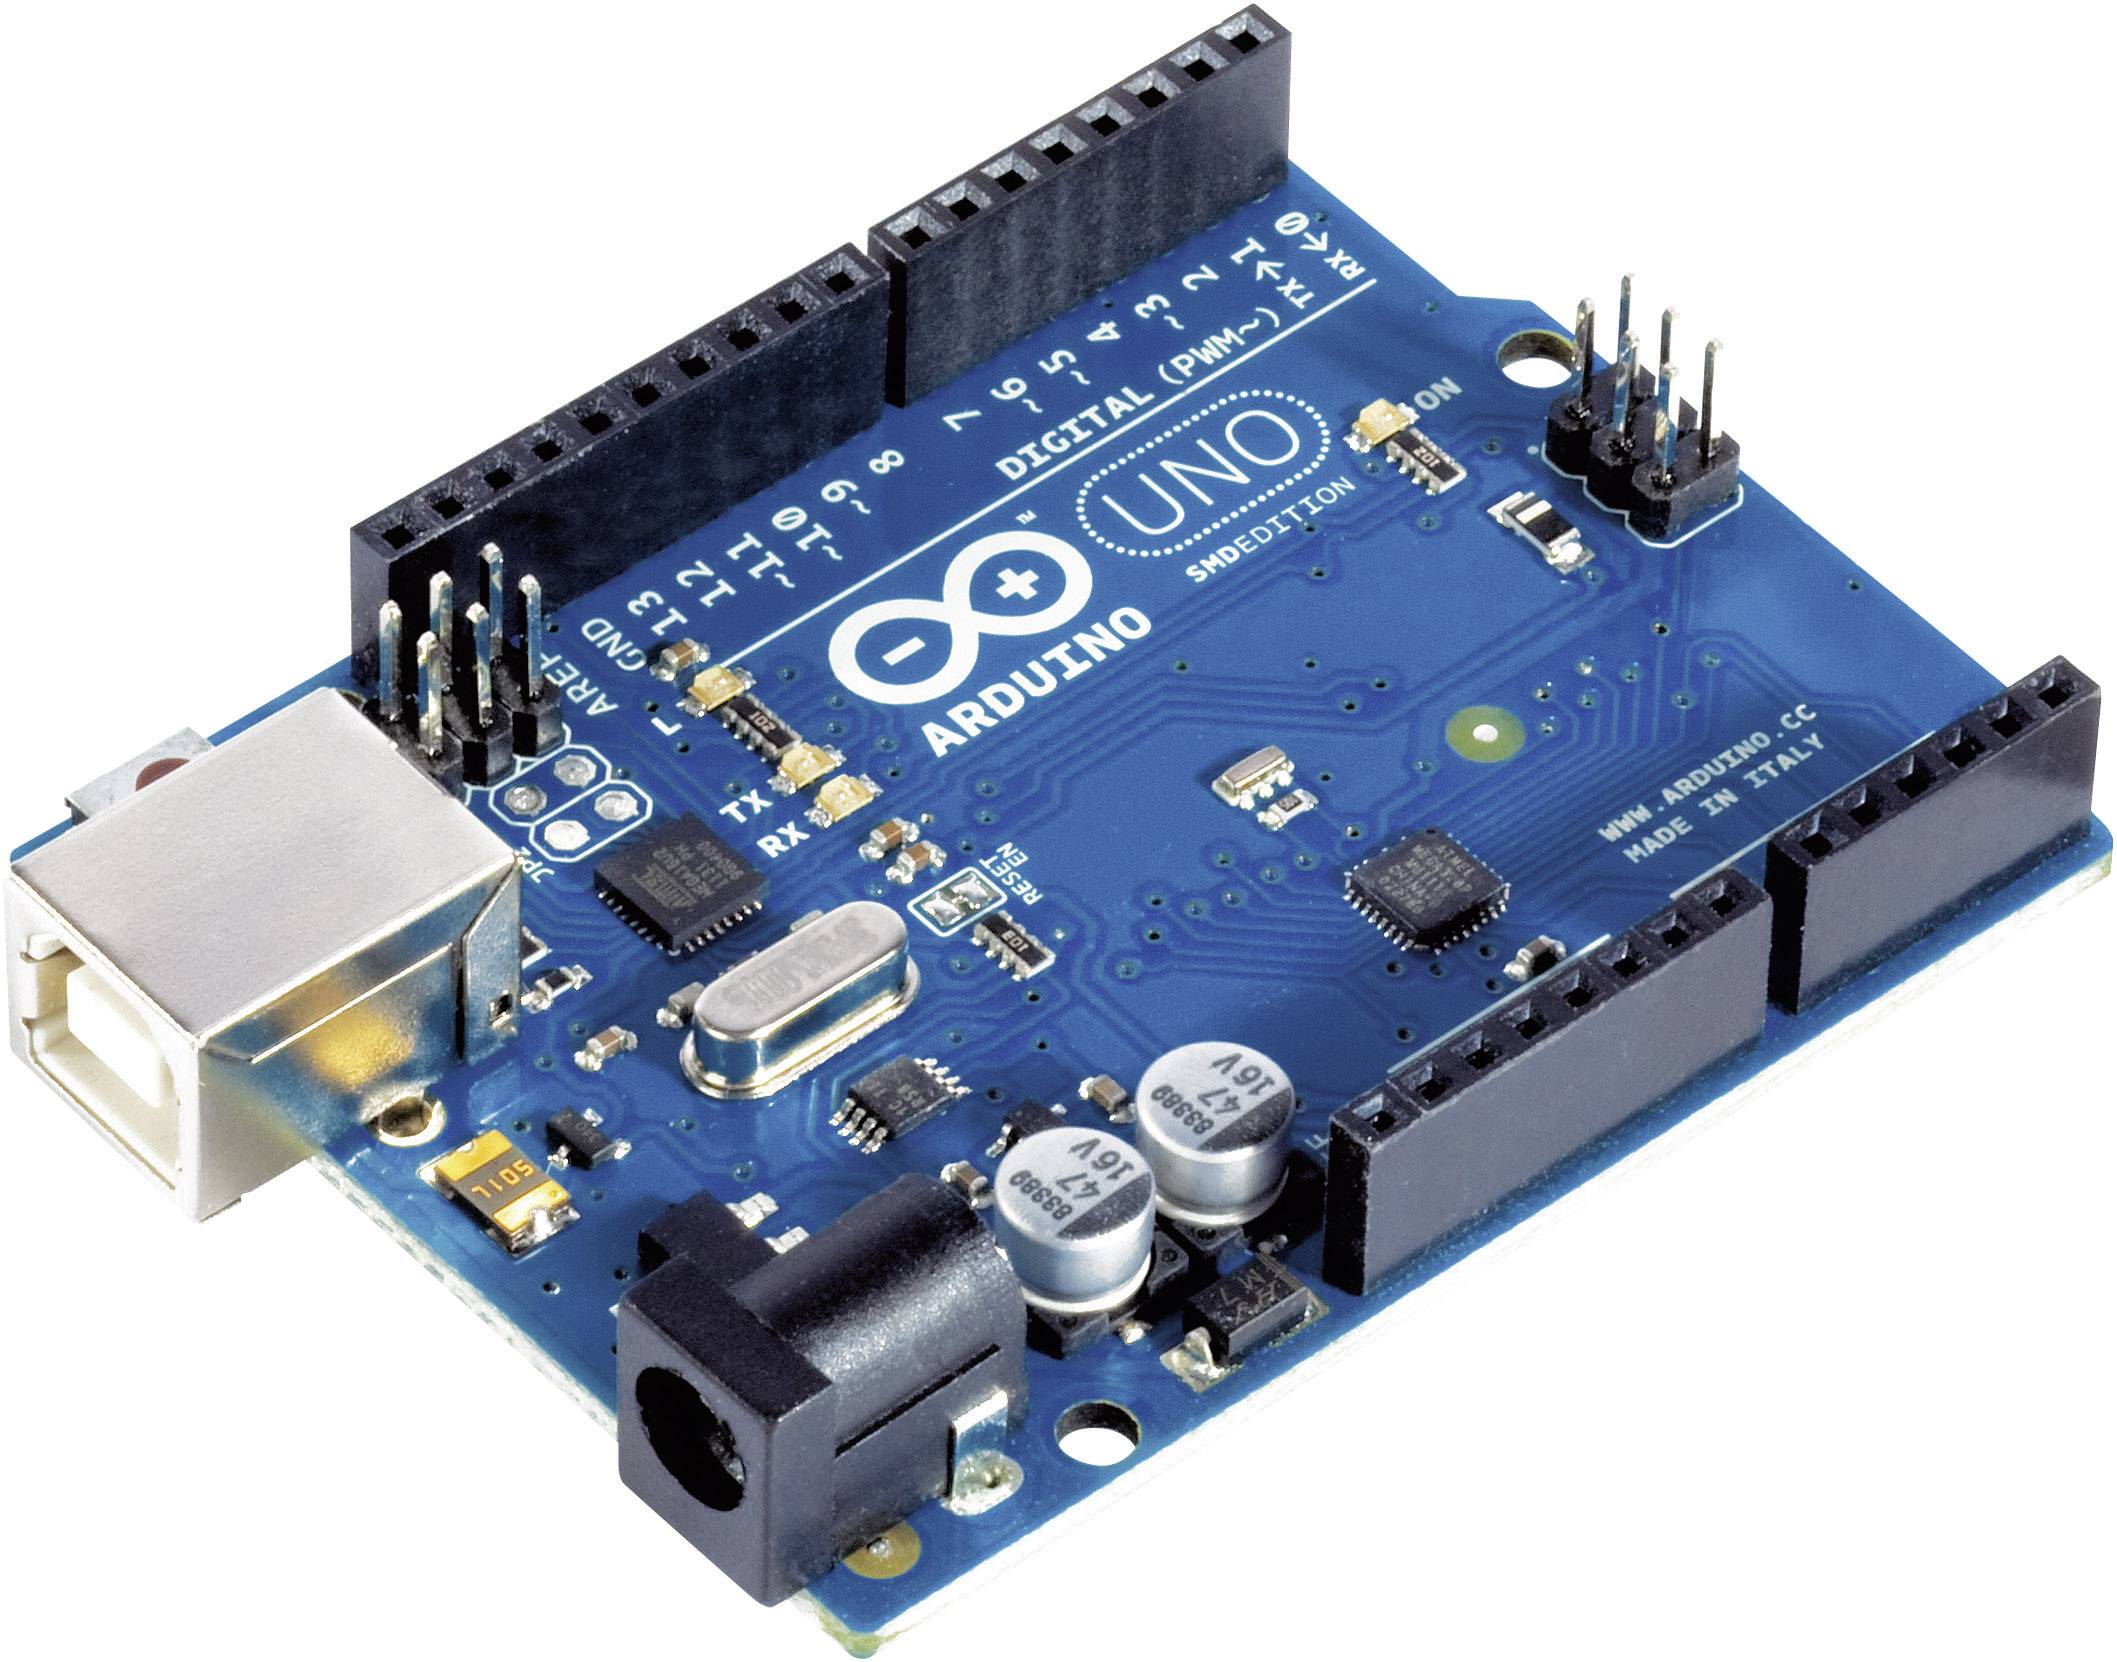 Arduino A000073 Uno Rev3 SMD Microcontroller Board | Conrad.com